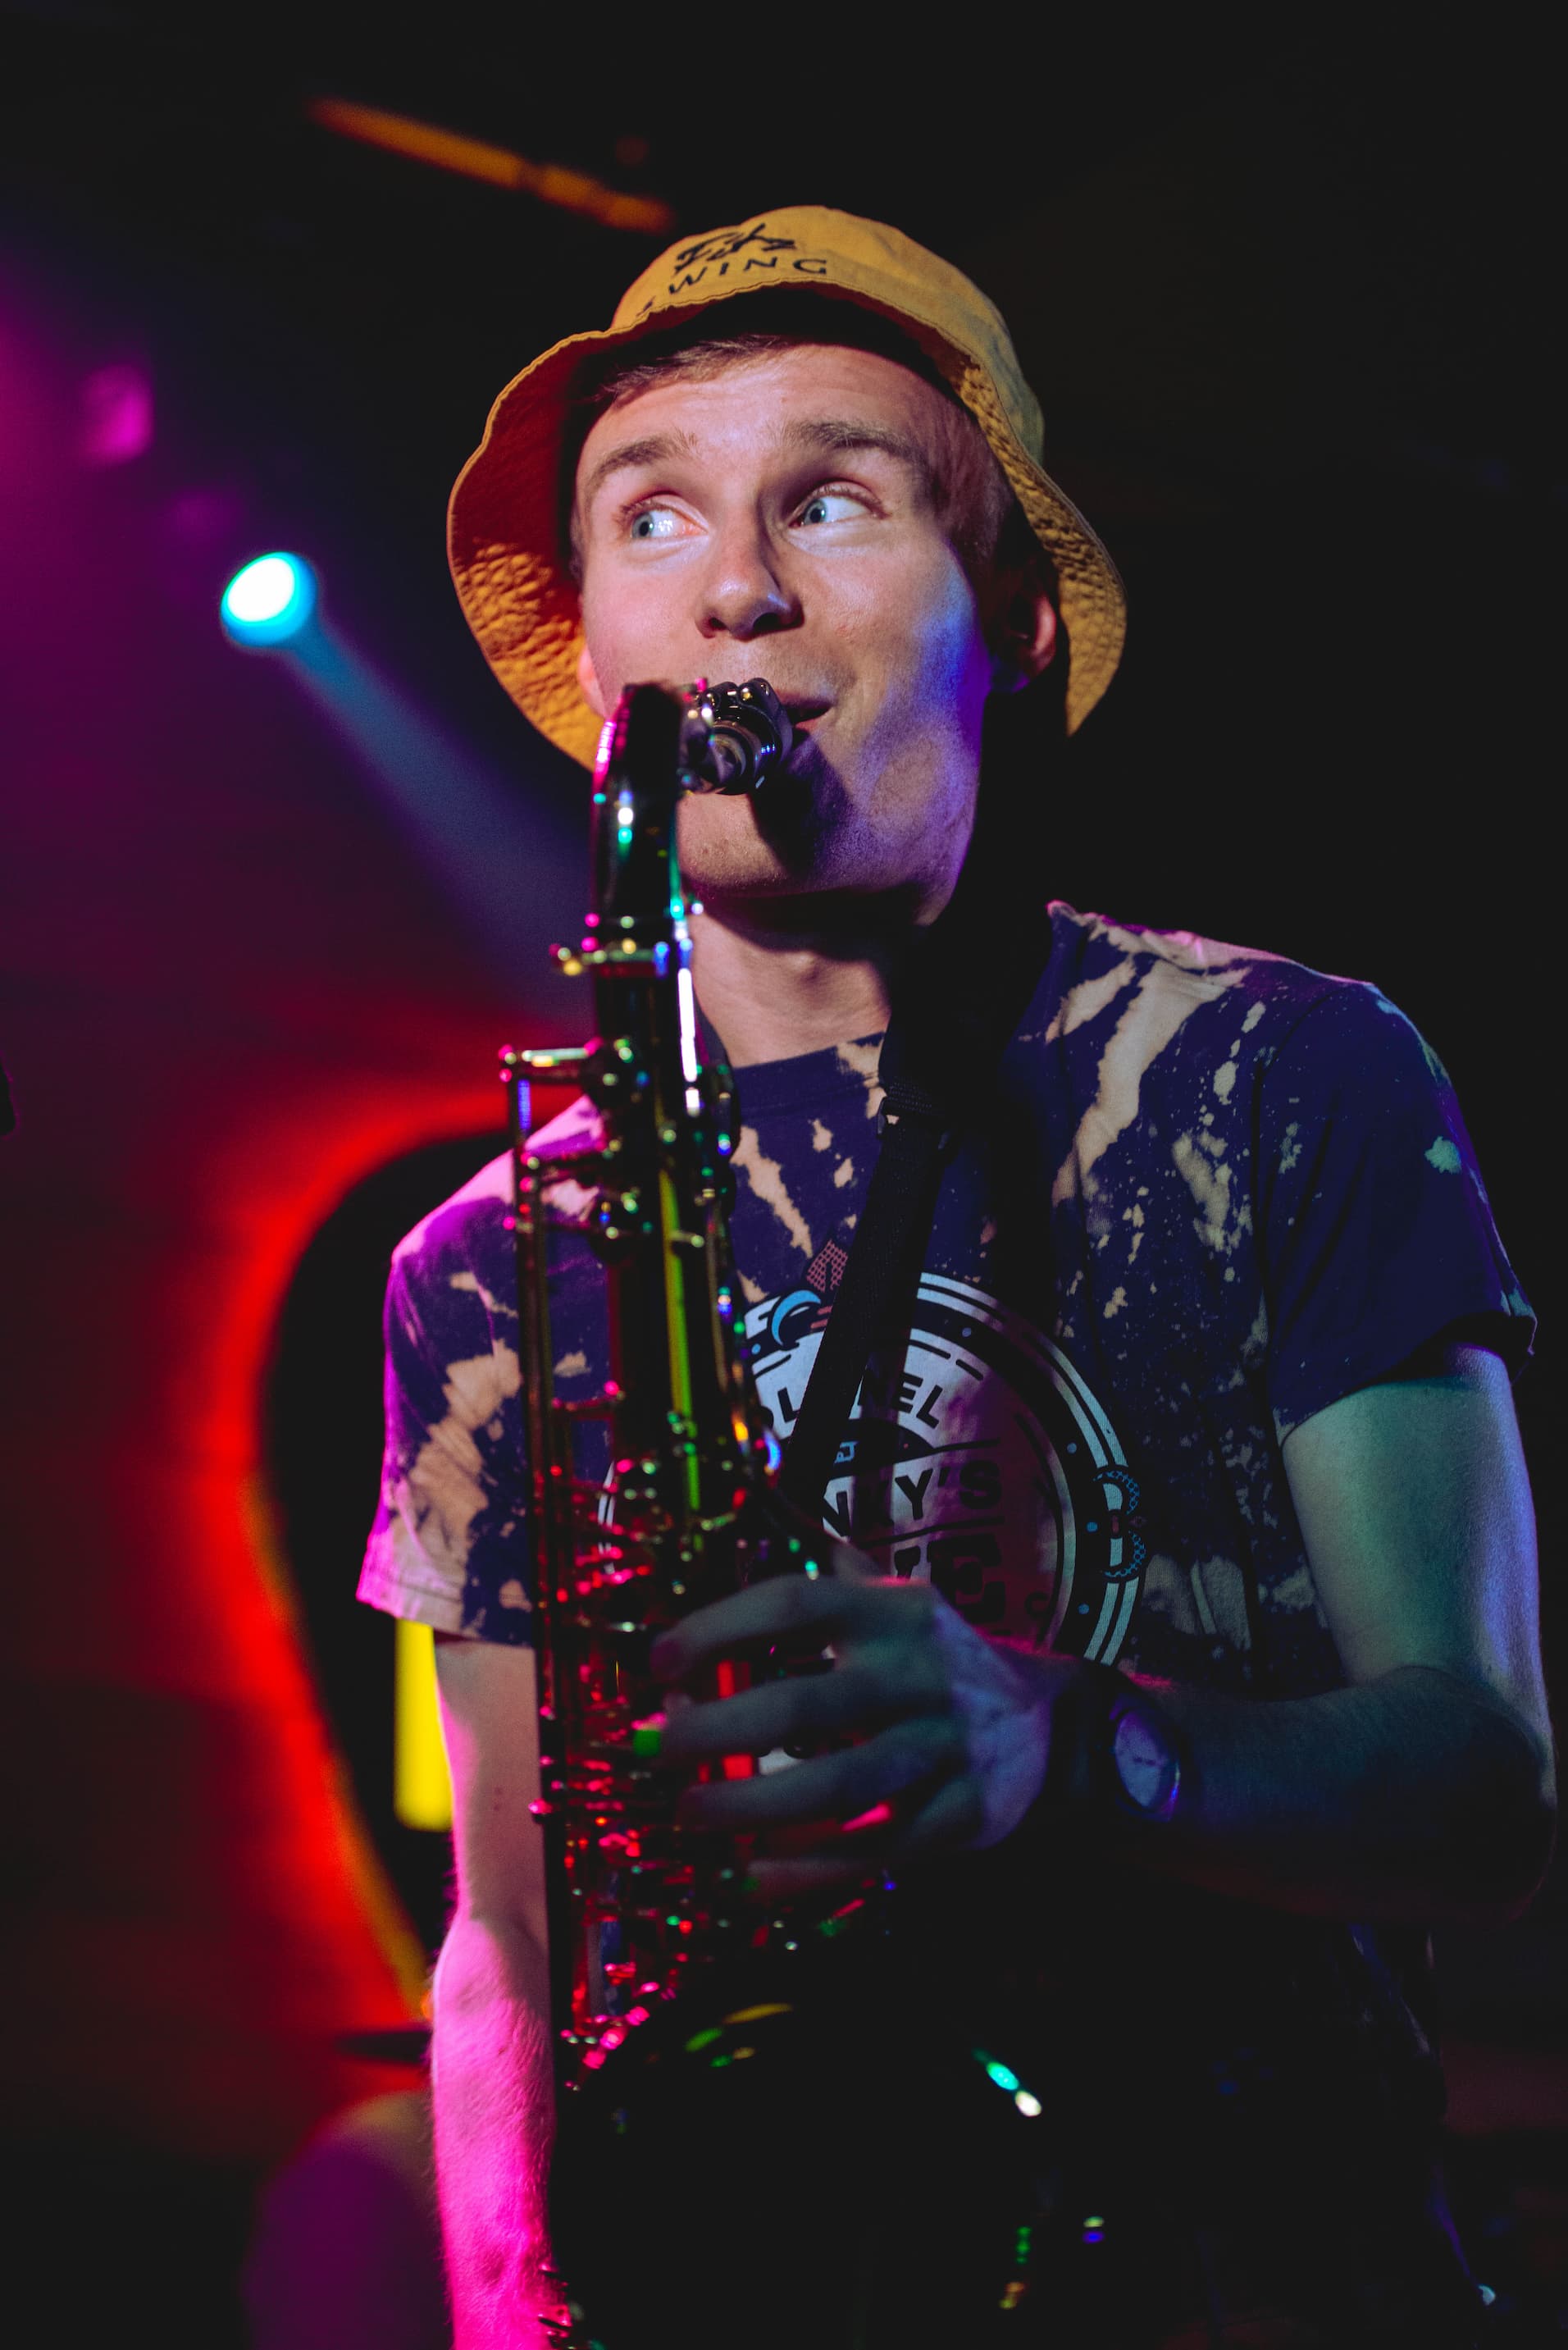 Matt playing saxophone at a live gig